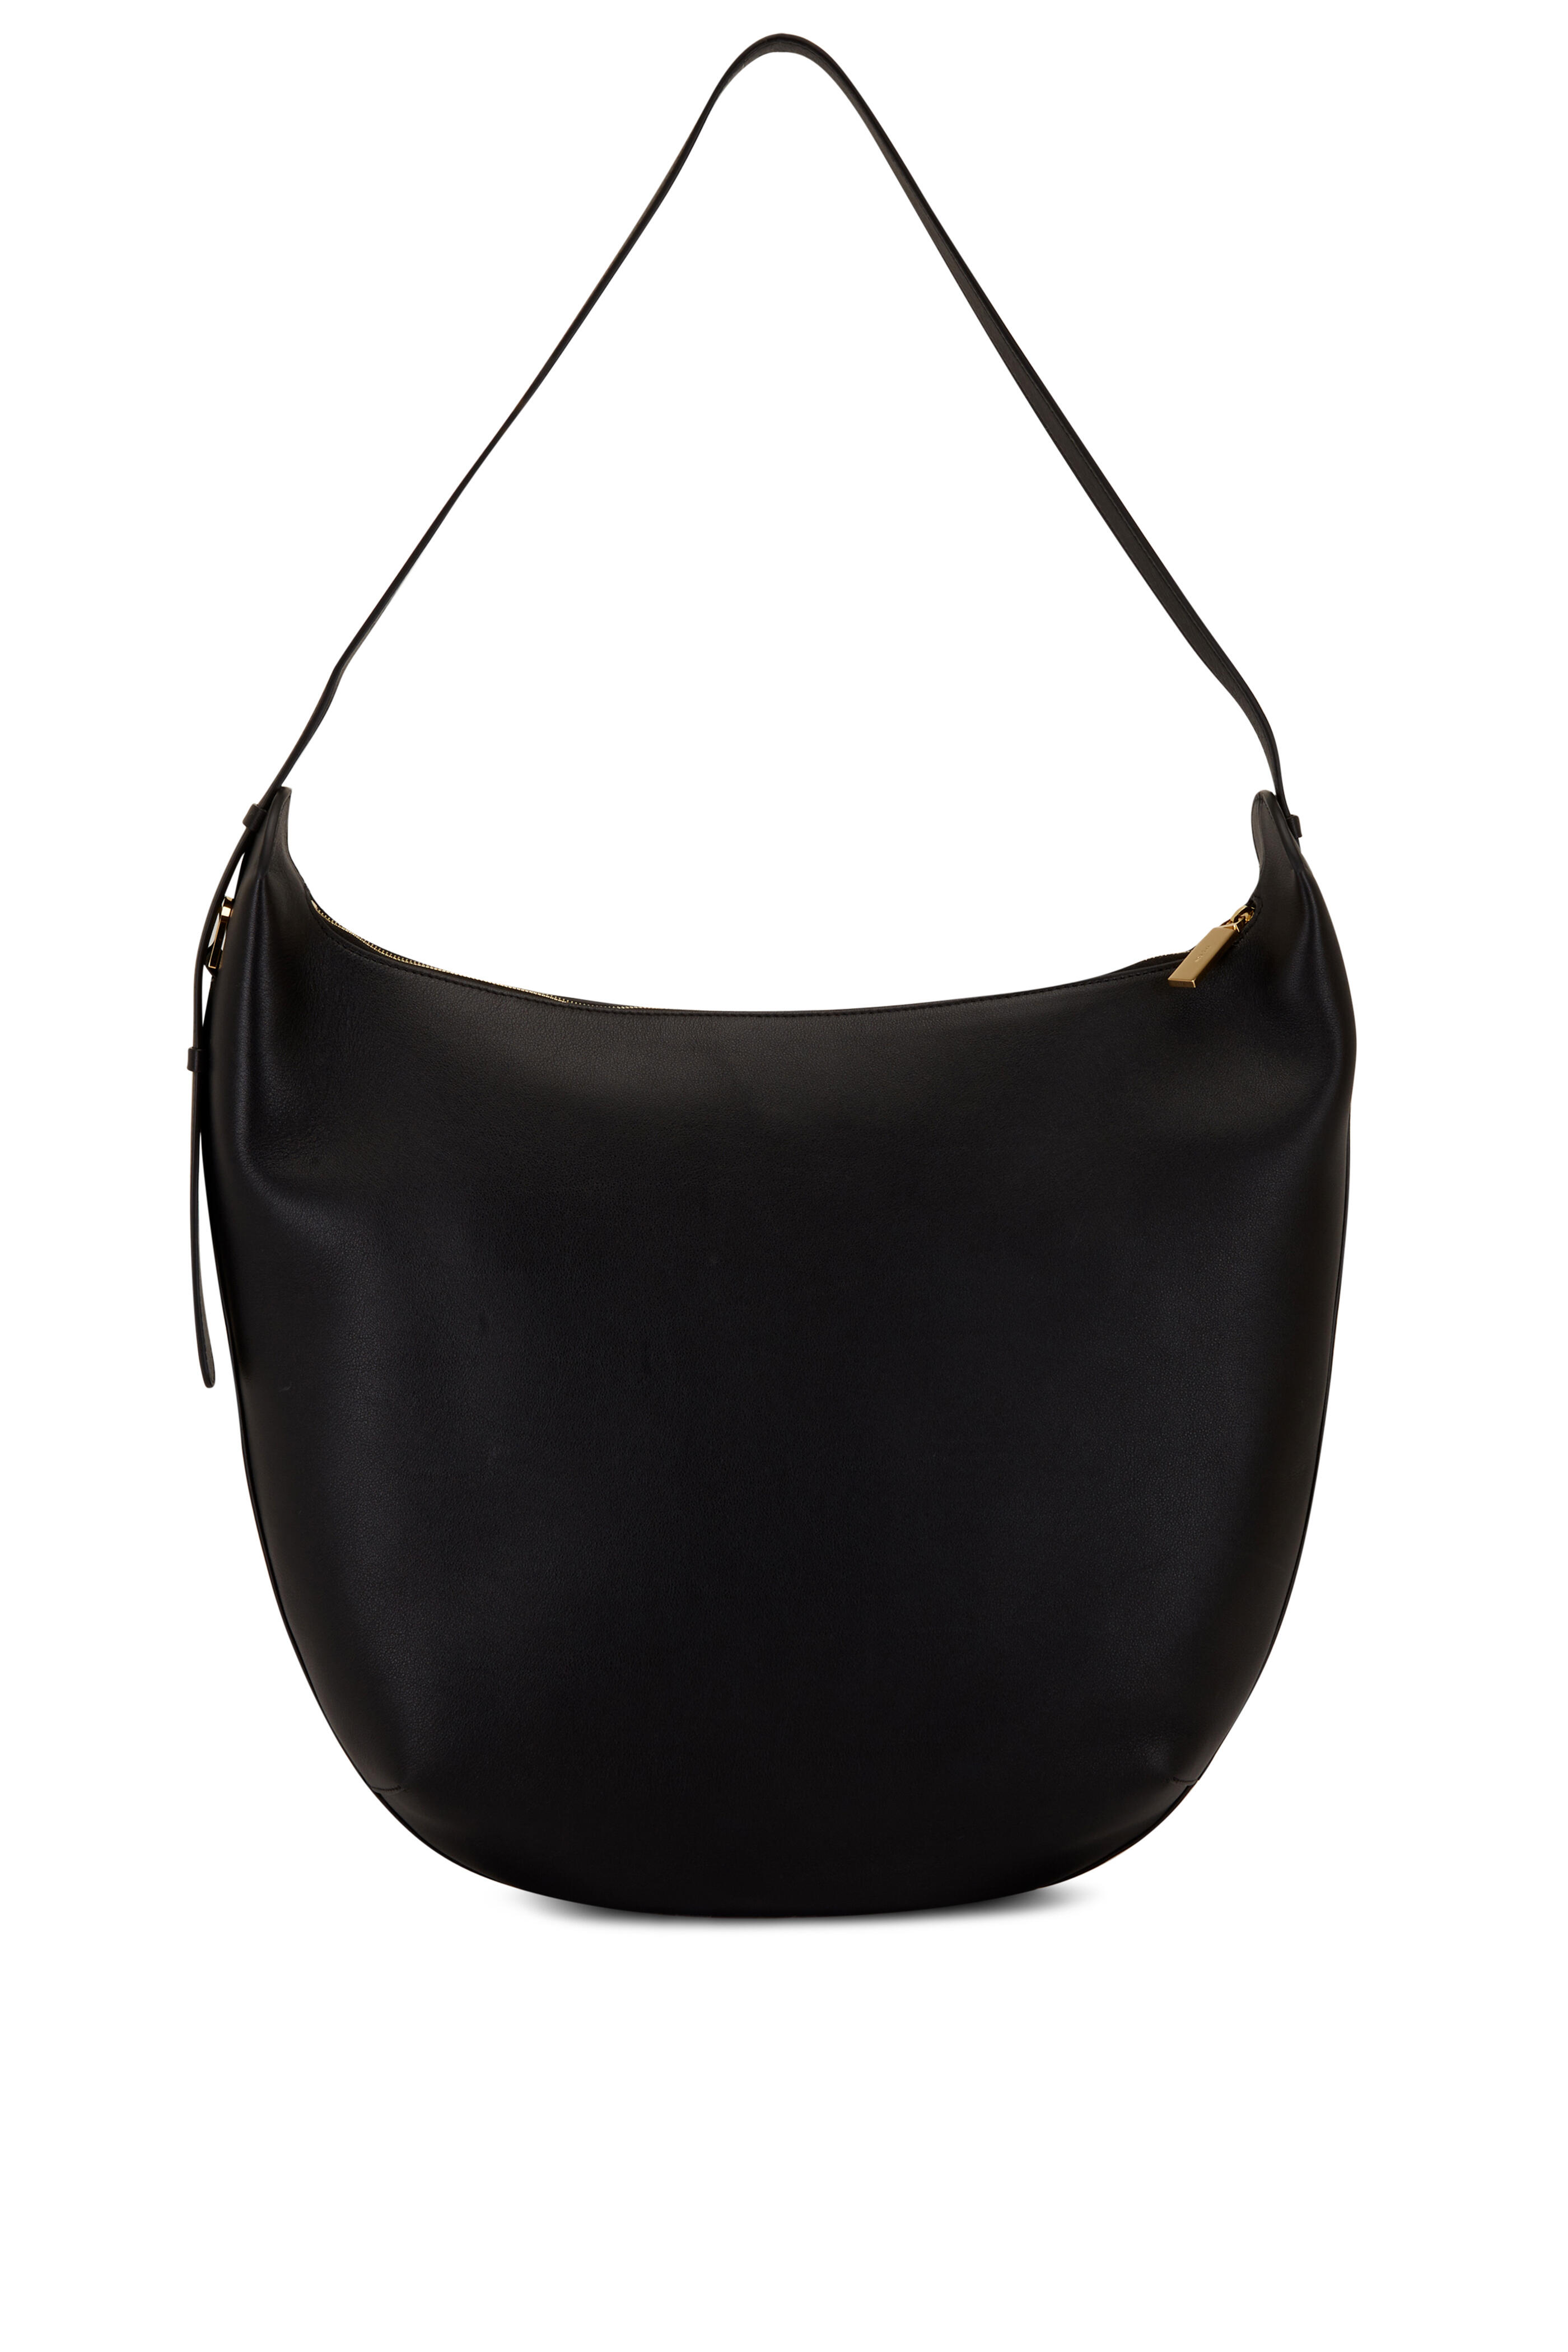 The Row - Allie Black Leather North South Shoulder Hobo Bag